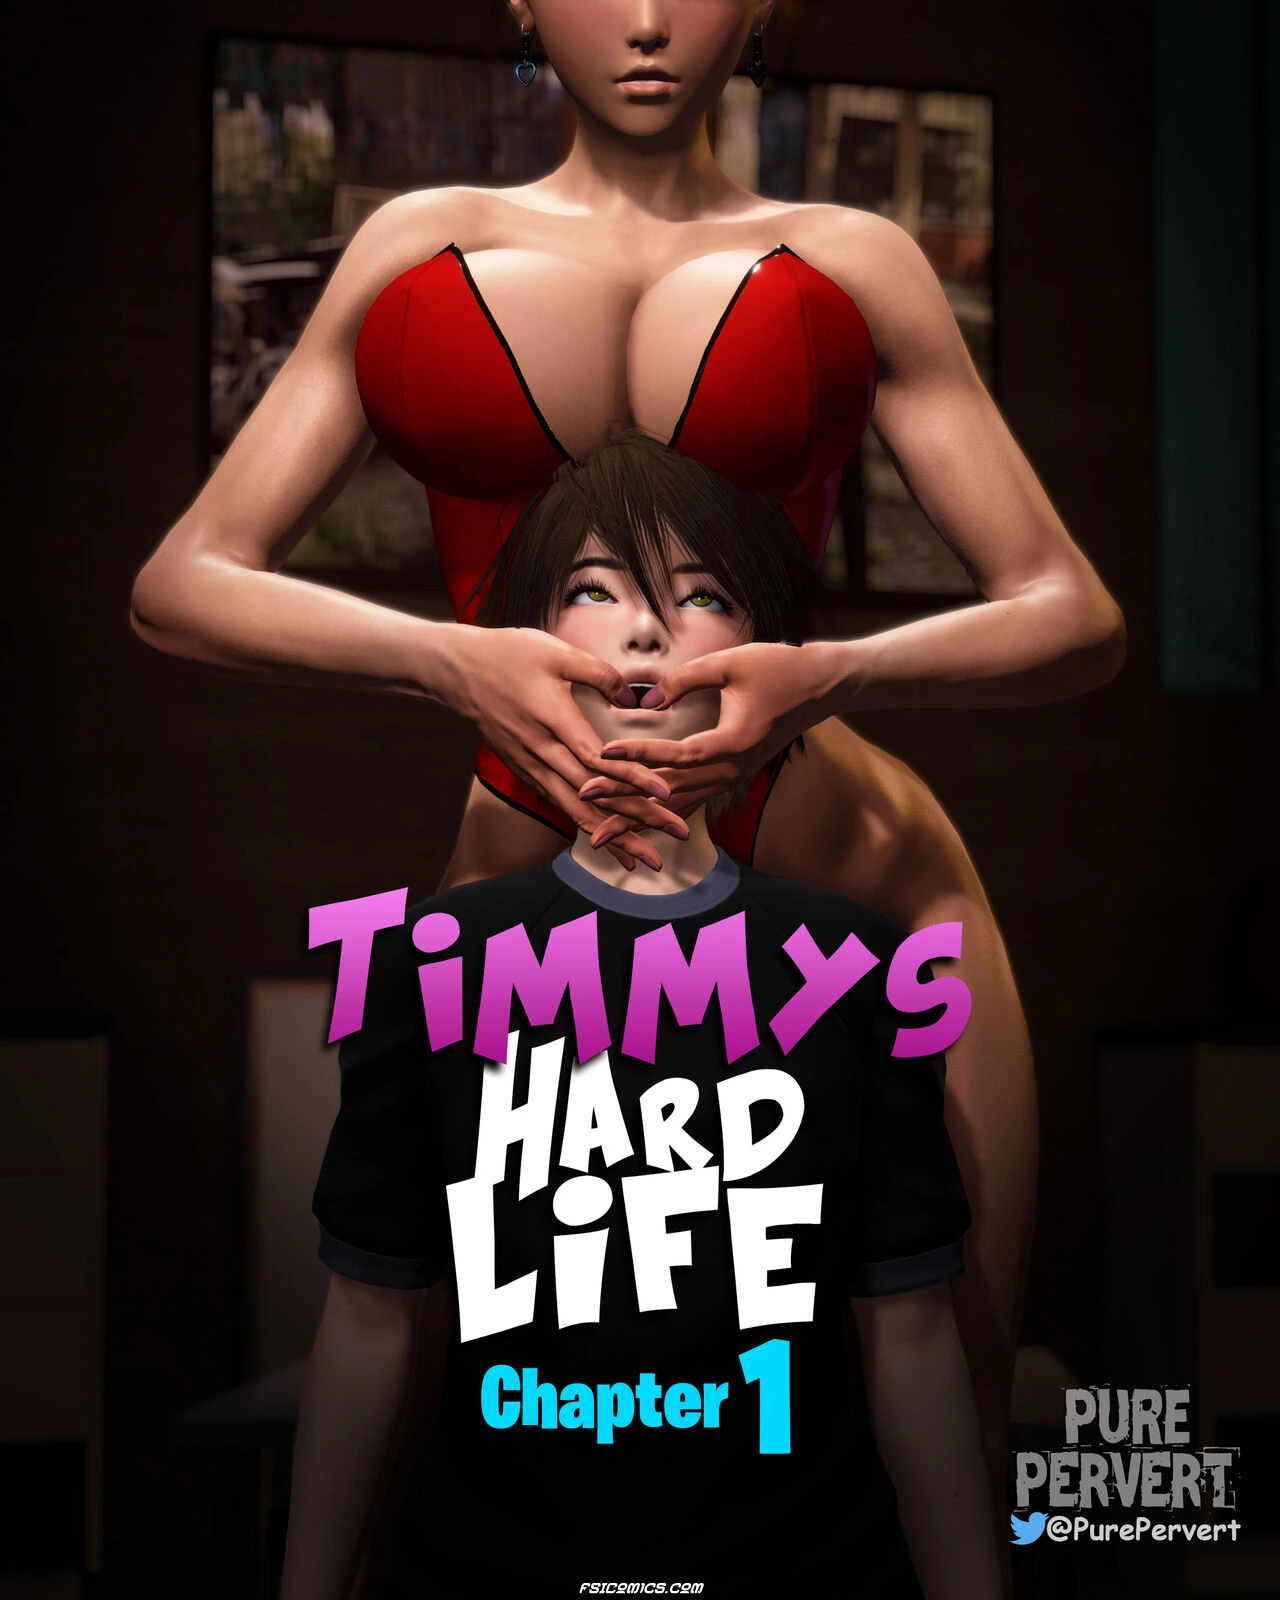 Timmy's Hard Life Chapter 1 - PurePervert - 7 - FSIComics